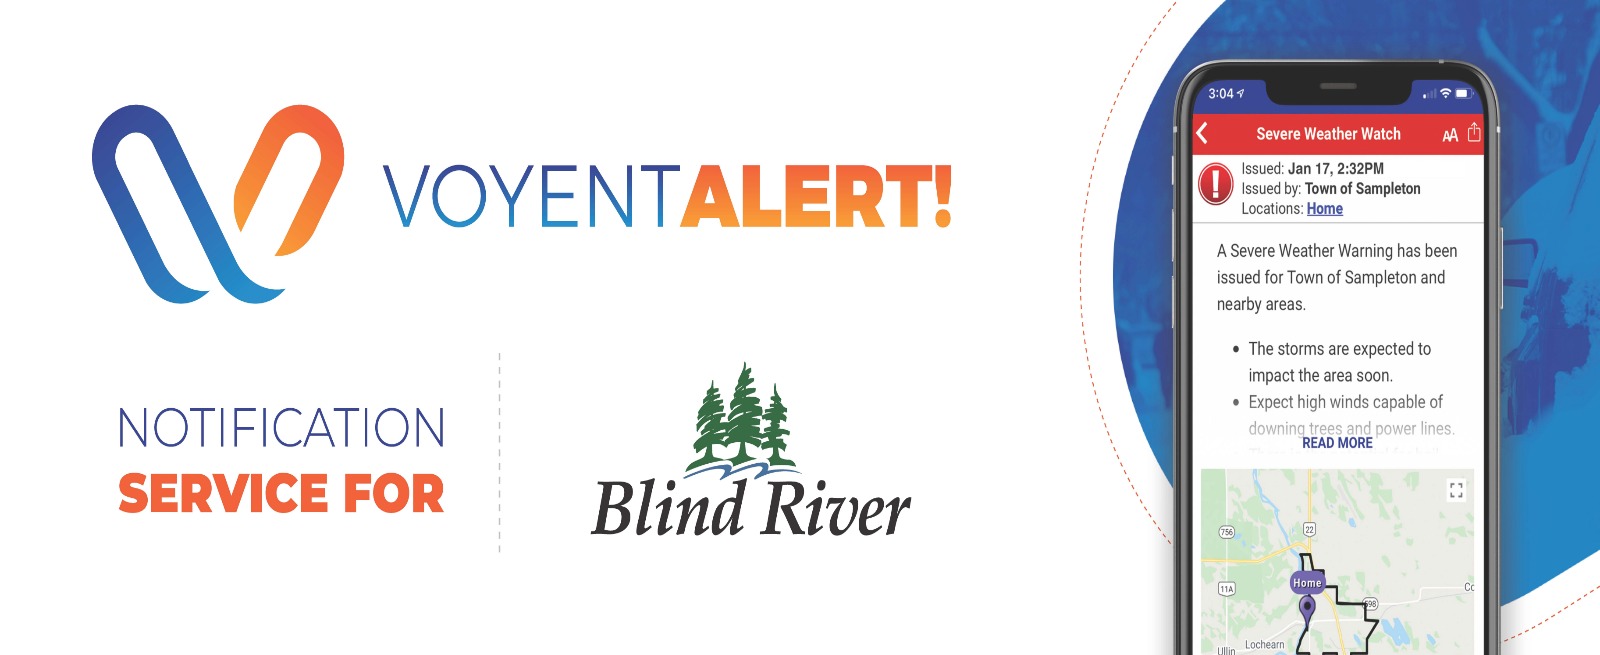 voyent alert banner with blind river logo